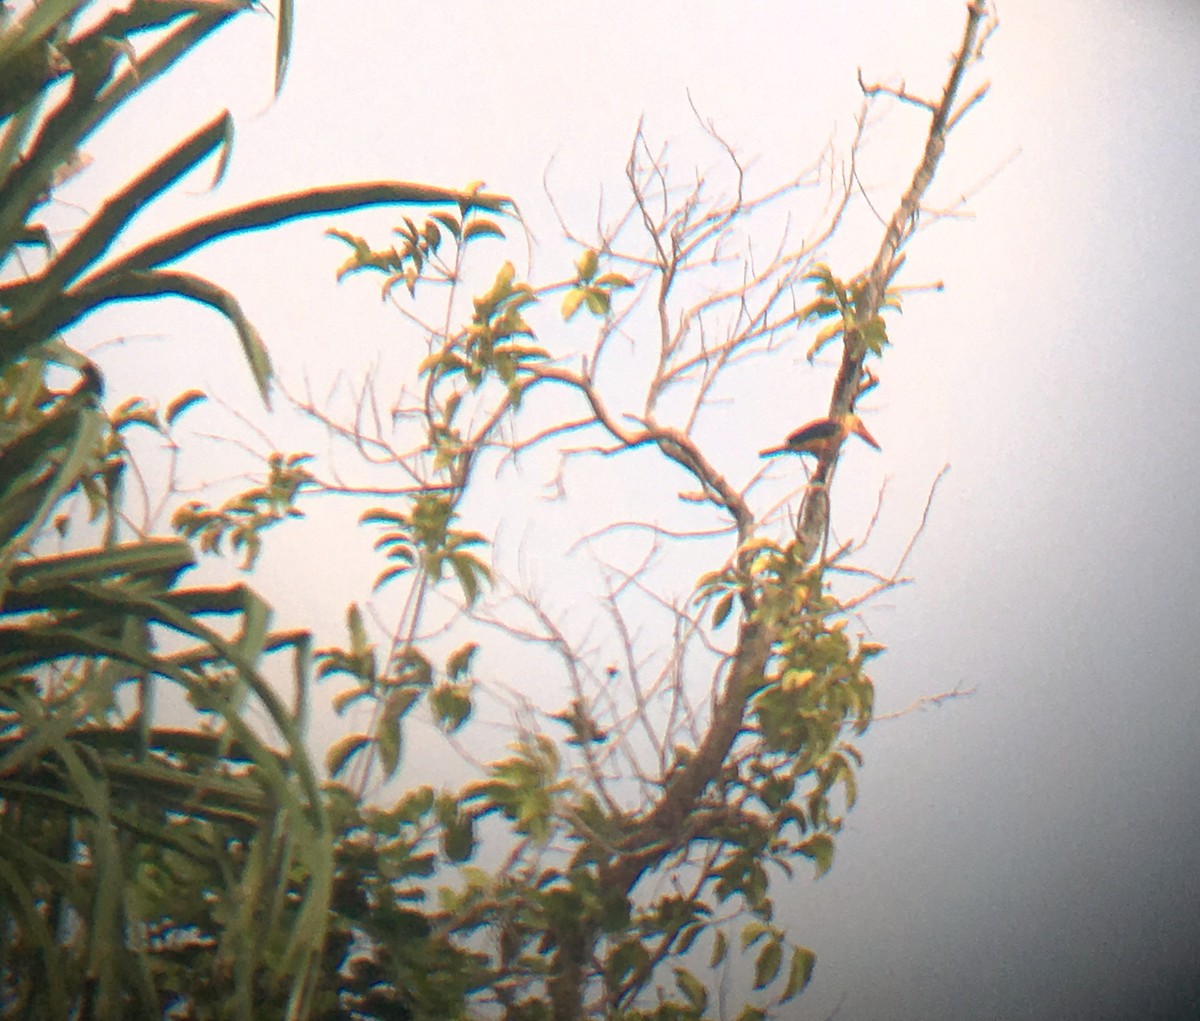 Stork-billed Kingfisher - UDAY MONDAL